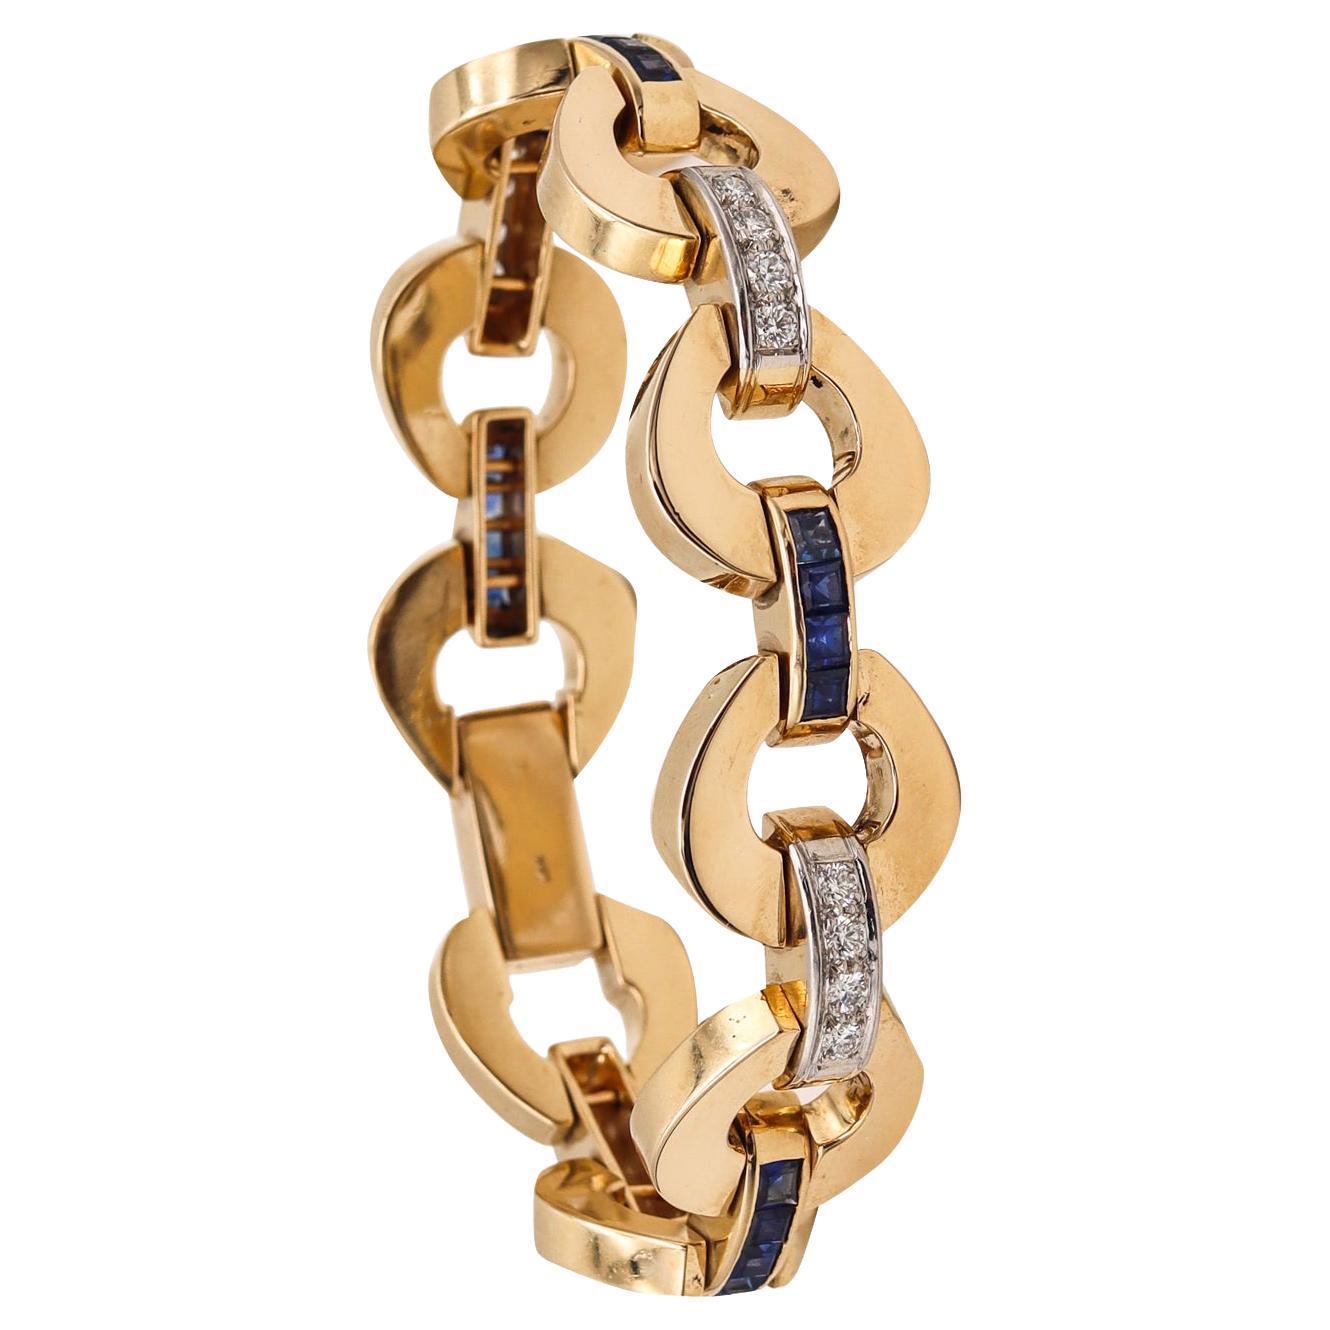 Retro Modernist Bracelet in 14Kt Yellow Gold with 6.56 Ctw Diamonds & Sapphires